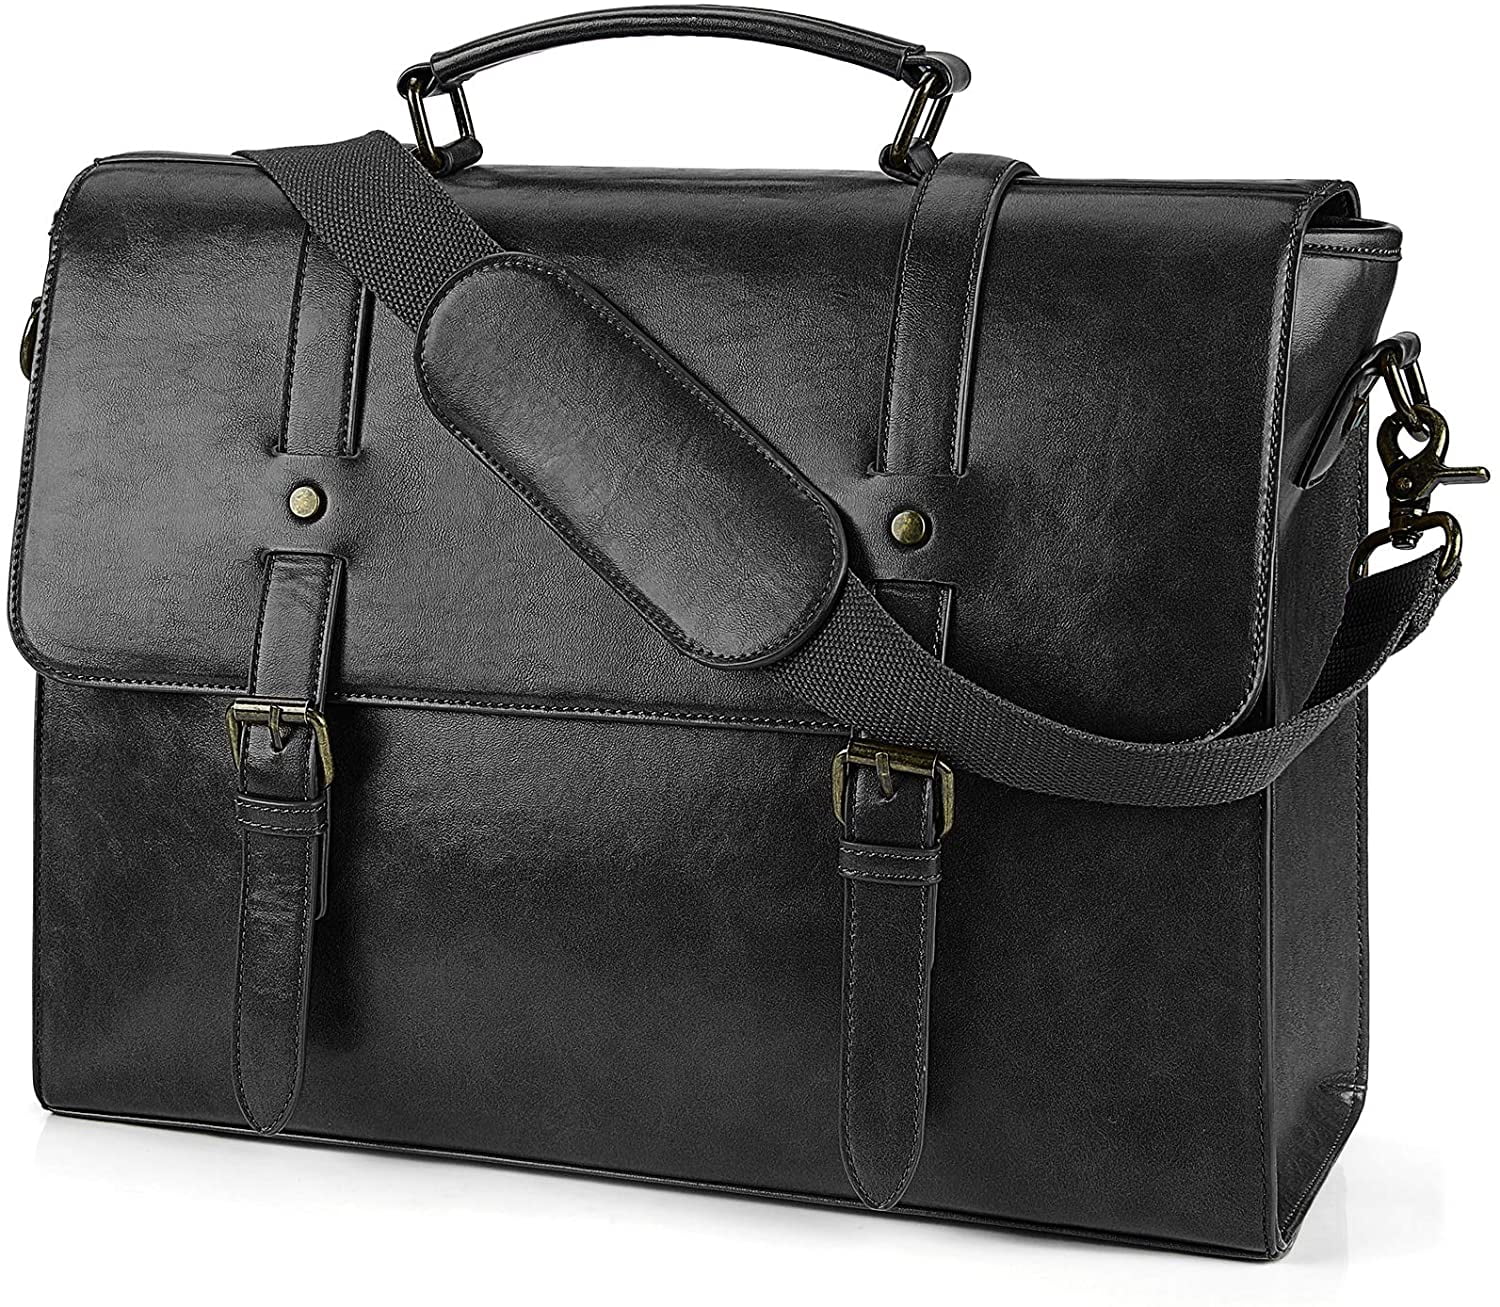 Lubardy Messenger Bag Mens Briefcase Laptop Bag 15.6 inch Shoulder Satchel Bag Waterproof Notebook Bags Vintage Leather for Work Business Trip School